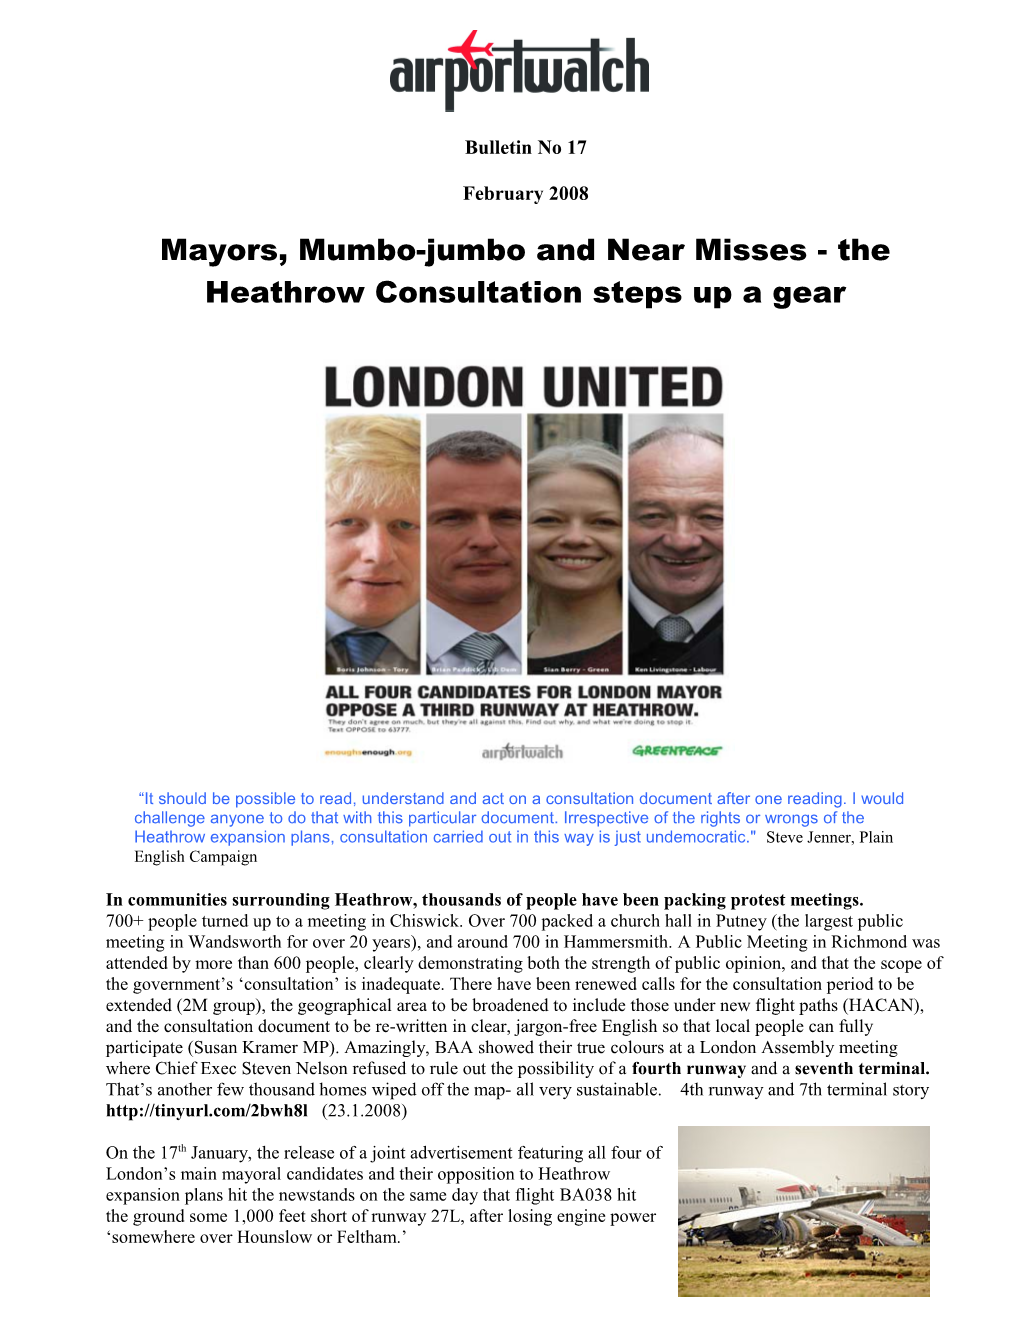 Mayors, Mumbo-Jumbo and Near Misses- the Heathrow Consultation Steps up a Gear